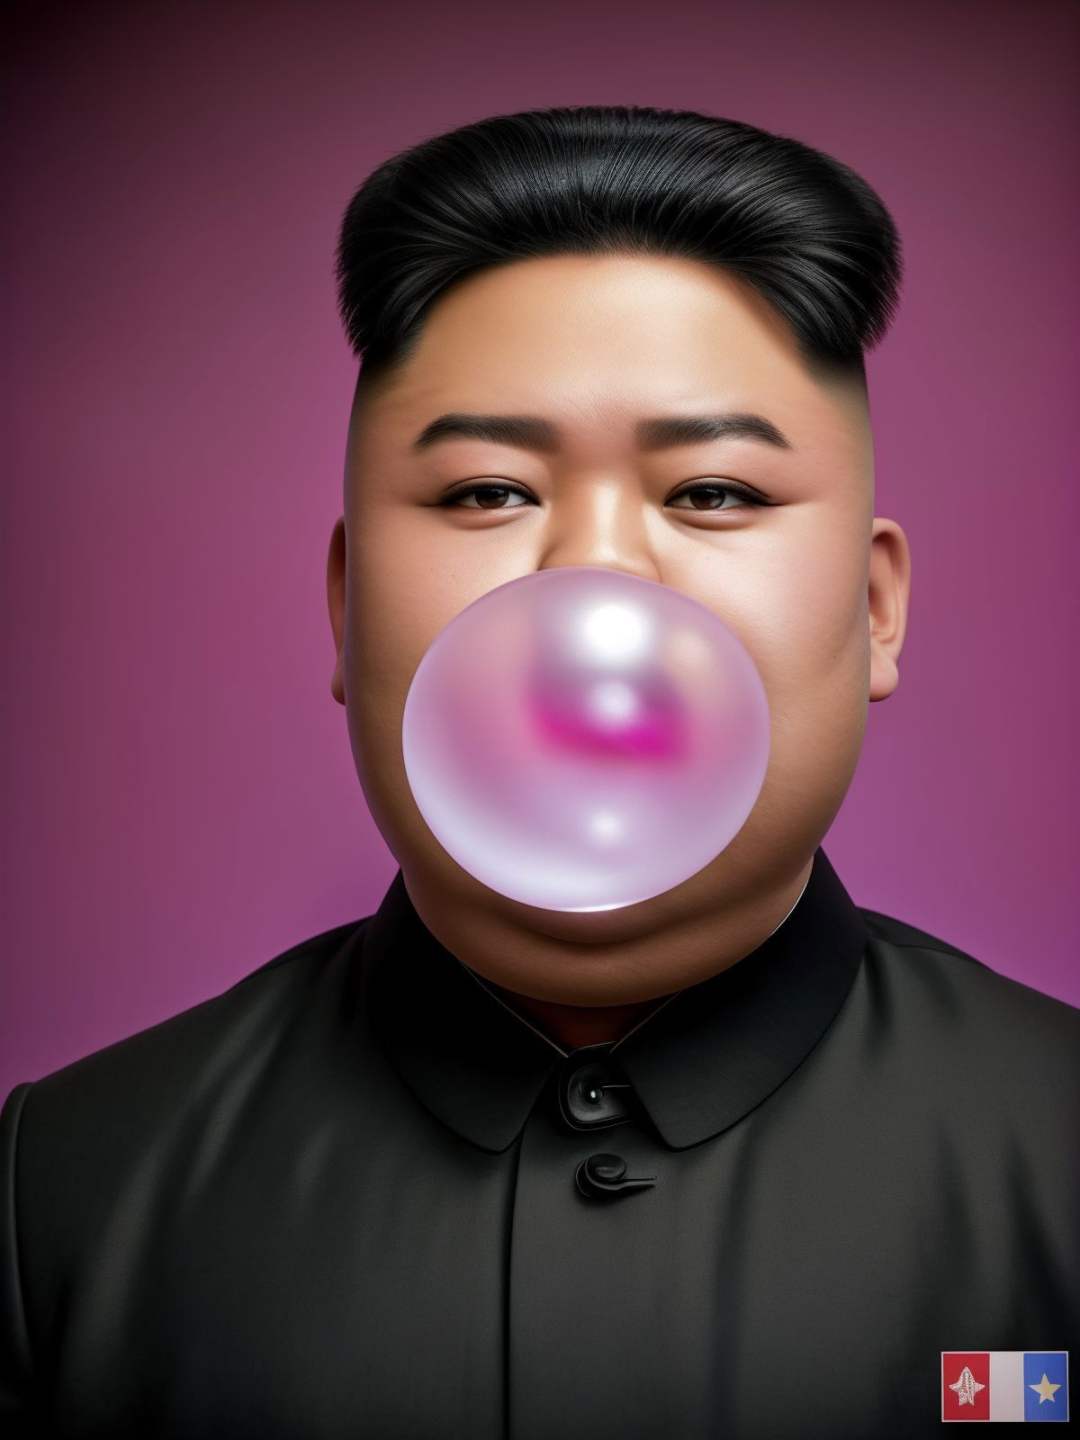 RAW Kim Jong Un blow Bubble Gum, looks at the camera, light background, bokeh, ornate background. <lora:Bubble Gum_v2.0:0.7>